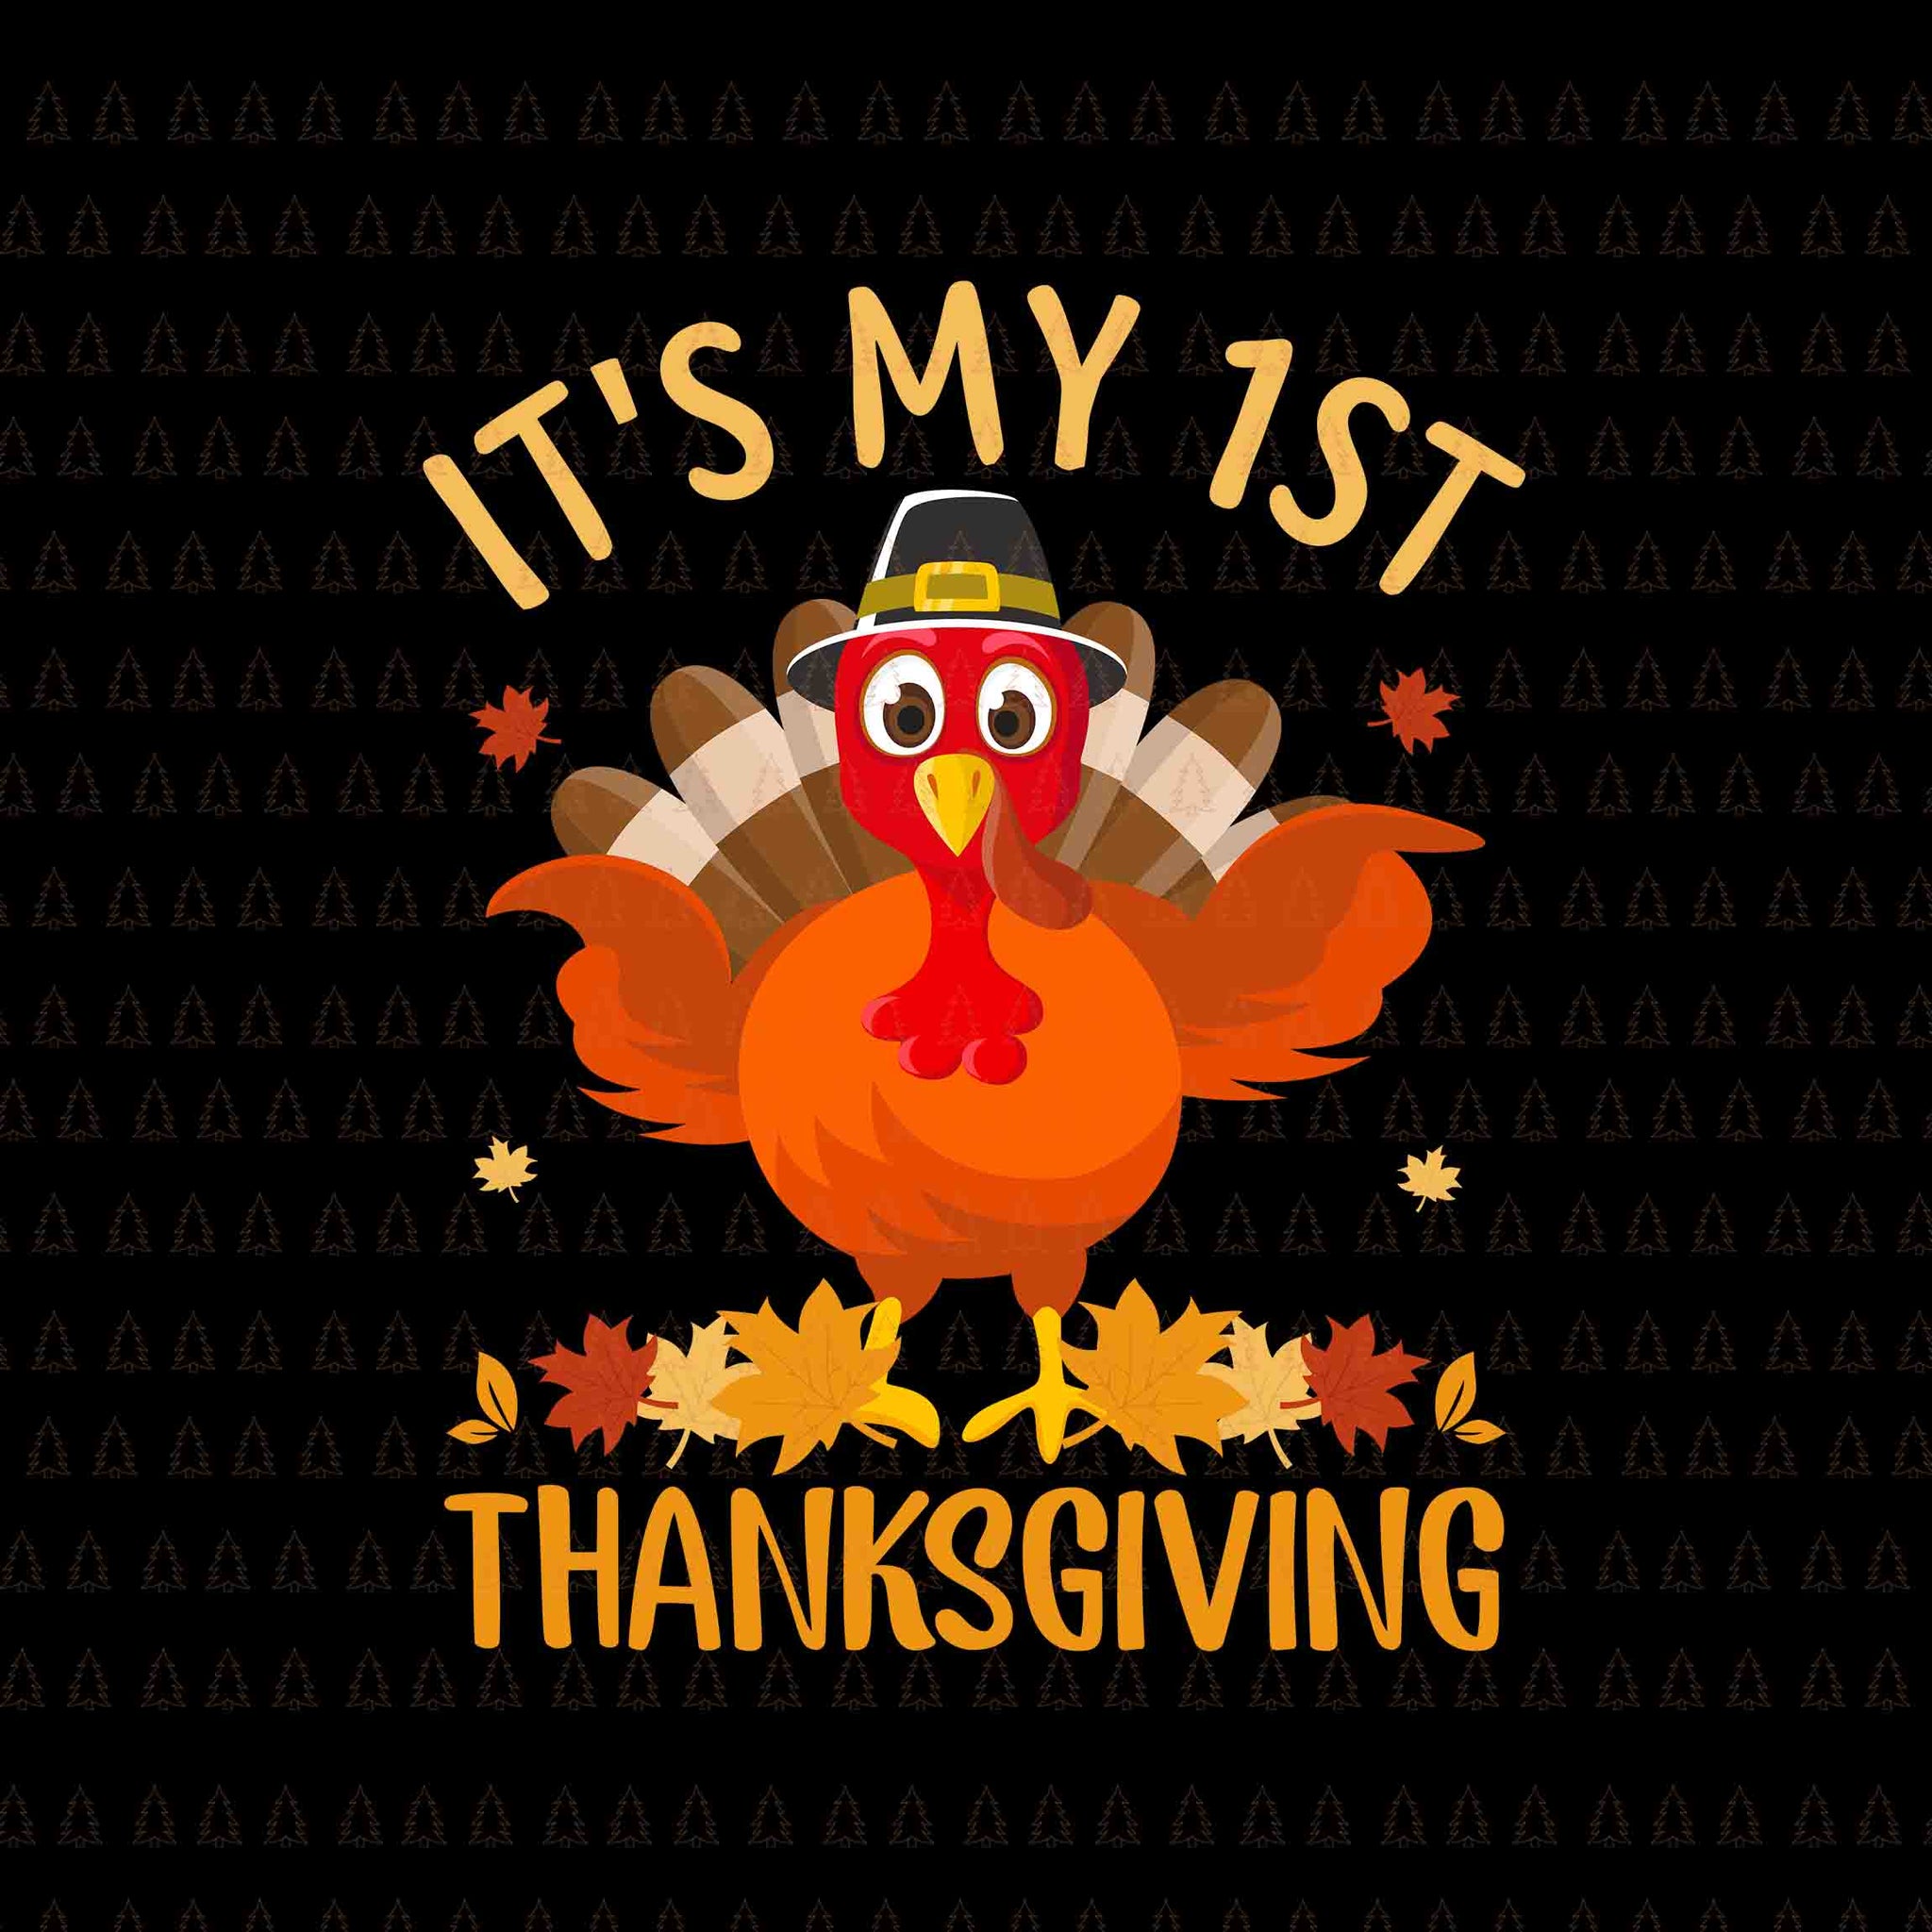 It's My 1ST Thanksgiving Svg, Happy Thanksgiving Svg, Turkey Svg, Turkey Day Svg, Thanksgiving Svg, Thanksgiving Turkey Svg, Thanksgiving 2021 Svg